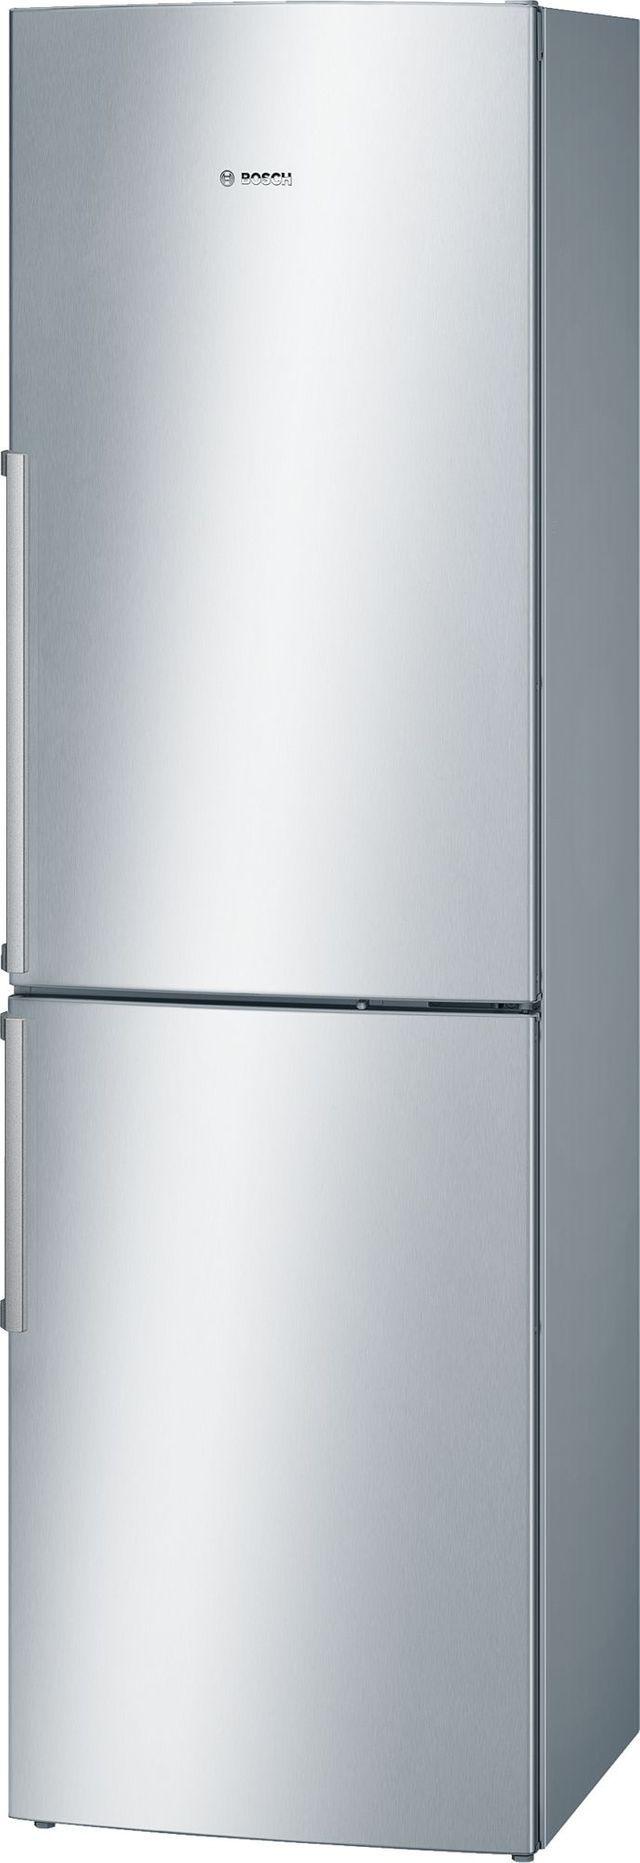 Bosch 800 Series 11.0 Cu. Ft. Stainless Steel Counter-Depth Bottom Freezer Refrigerator-1